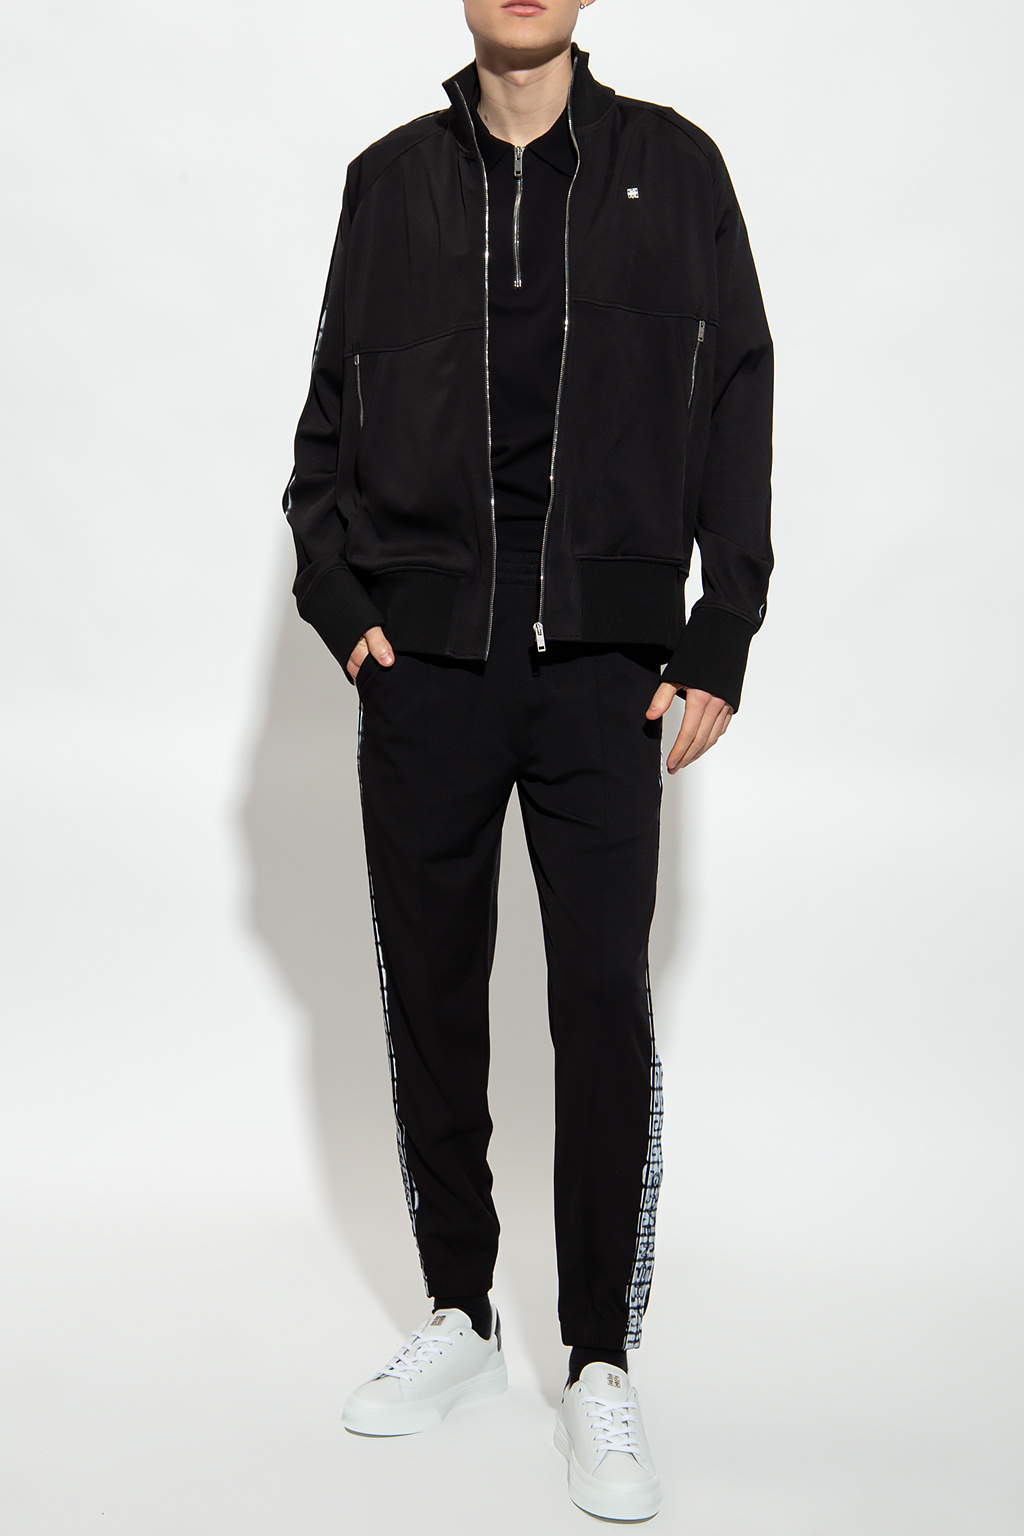 Givenchy Givenchy x Chito | Men's Clothing | Vitkac